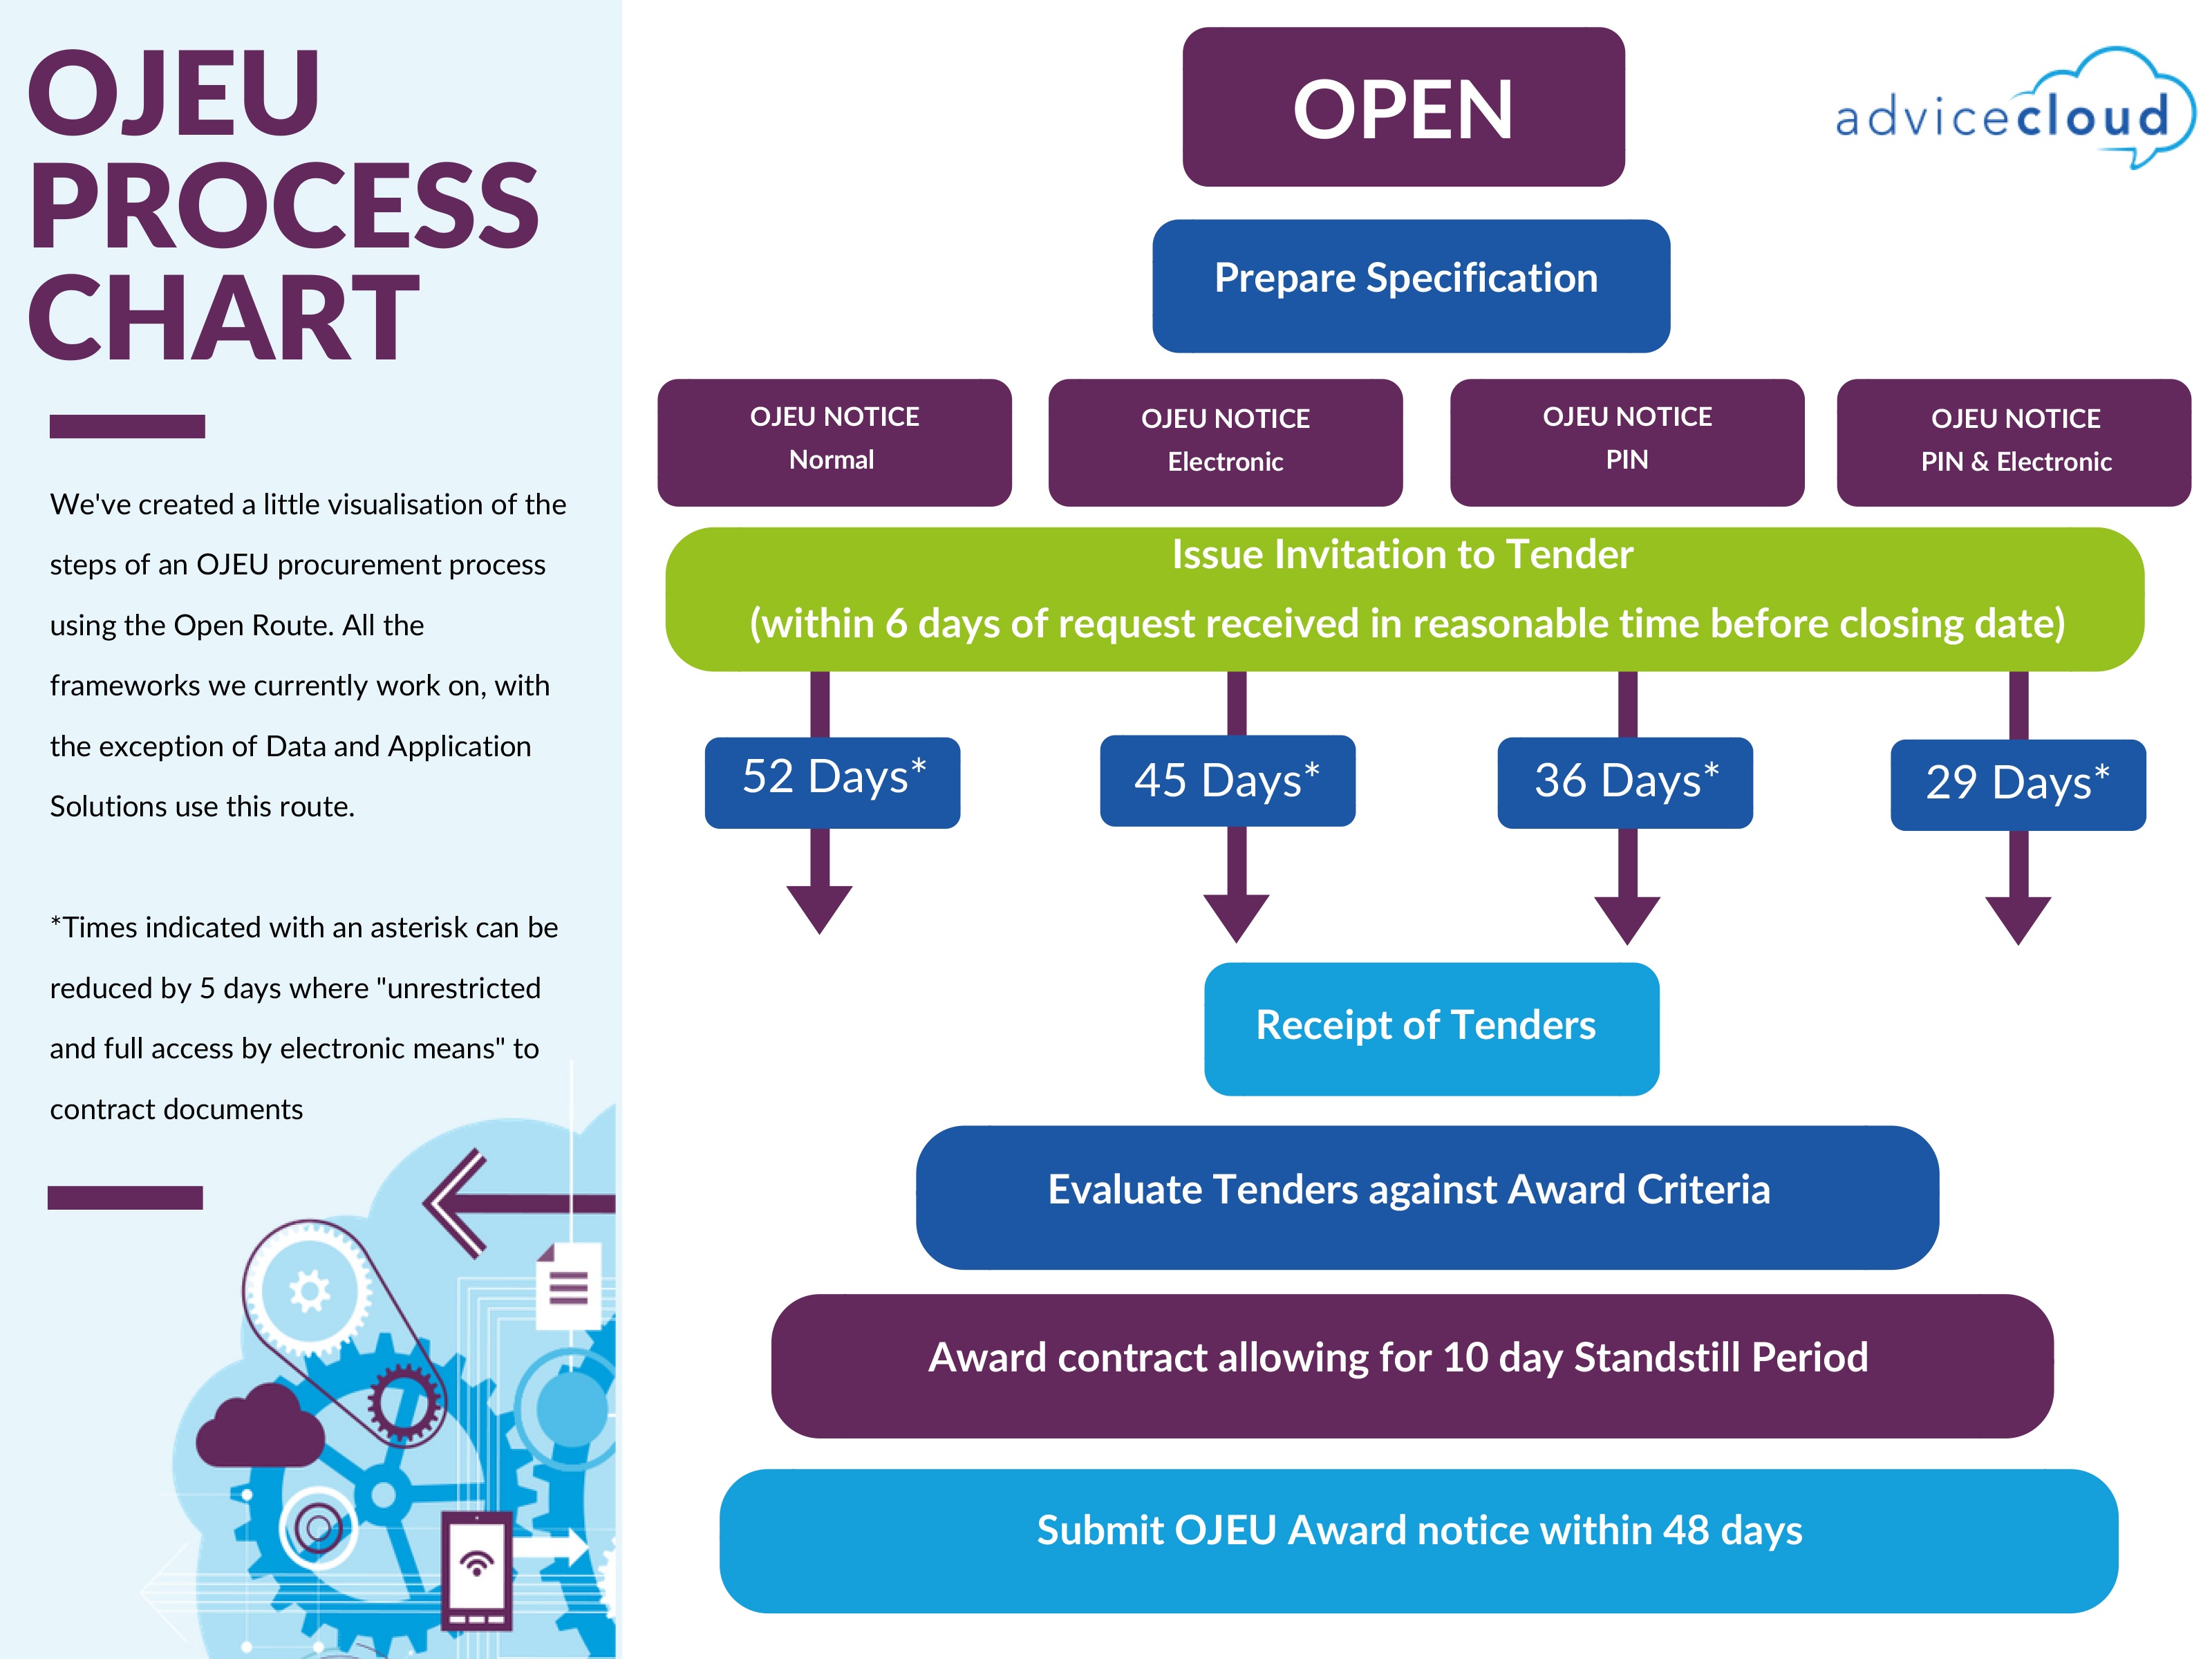 OJEU Processes: Open Route 